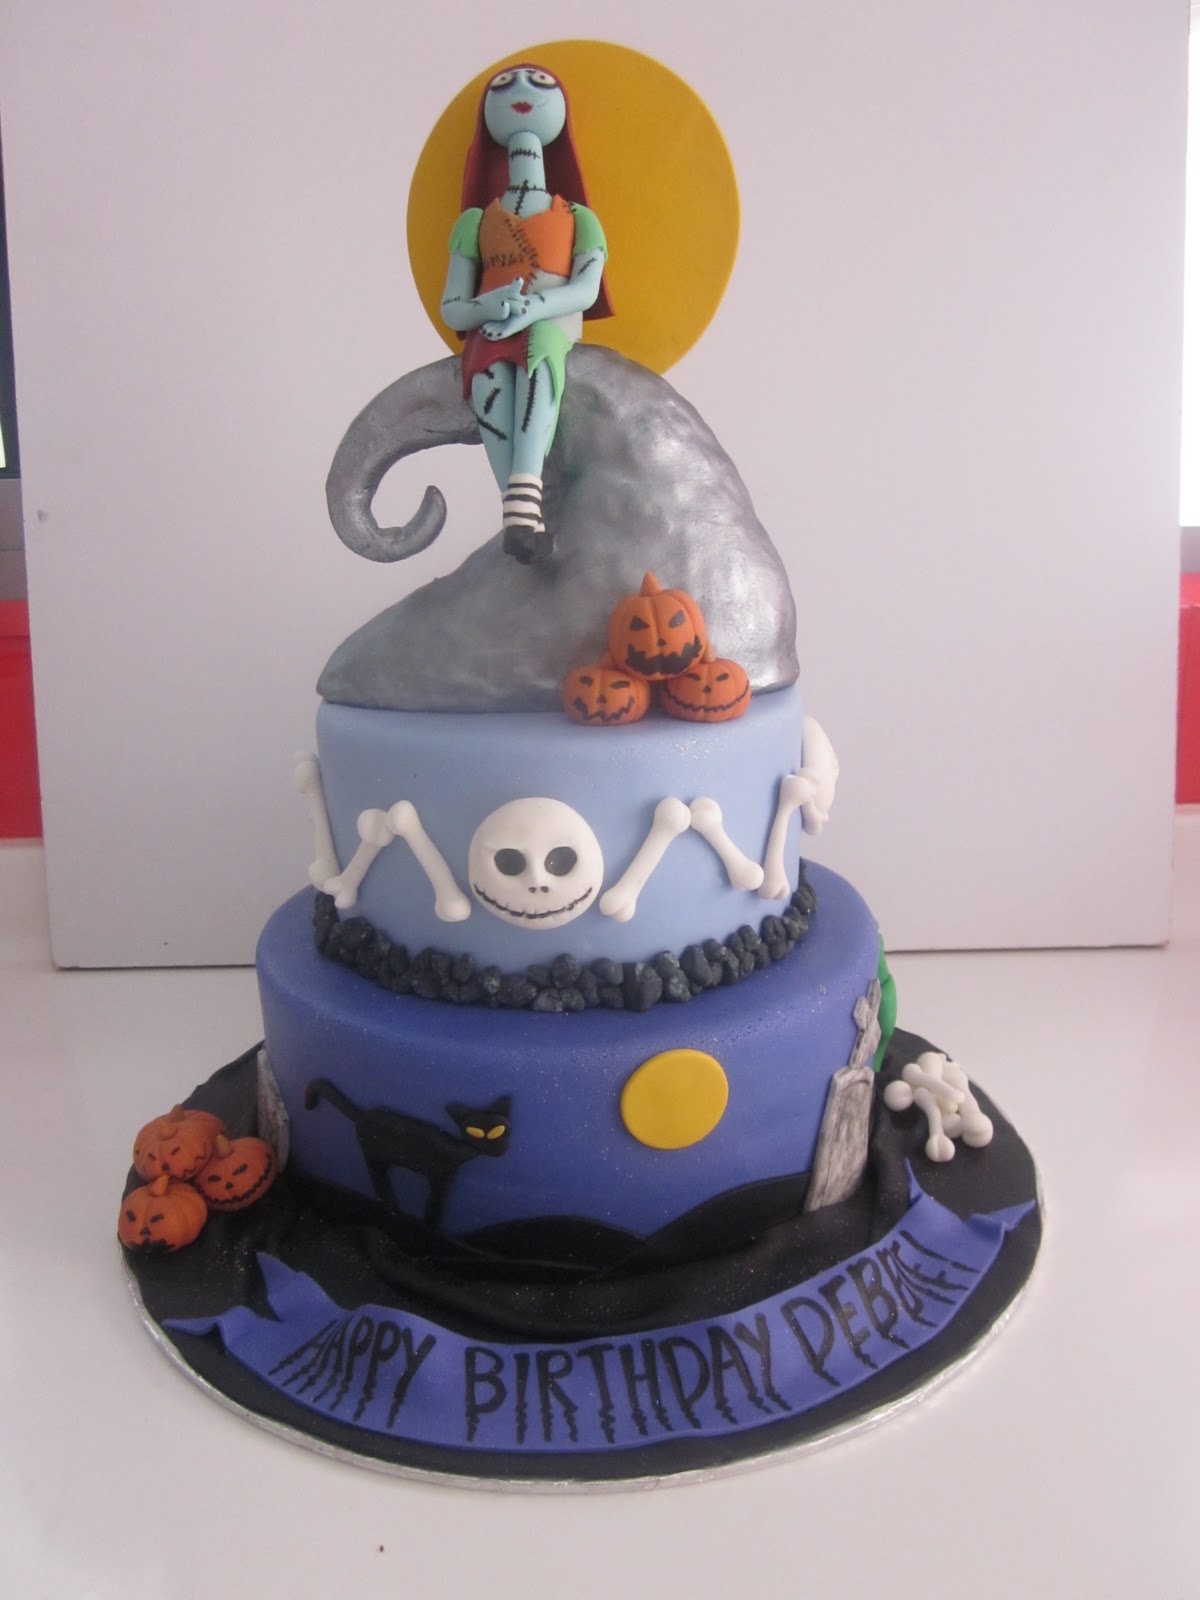 Celebrate with Cake!: Nightmare Before Christmas 2 tier Cake